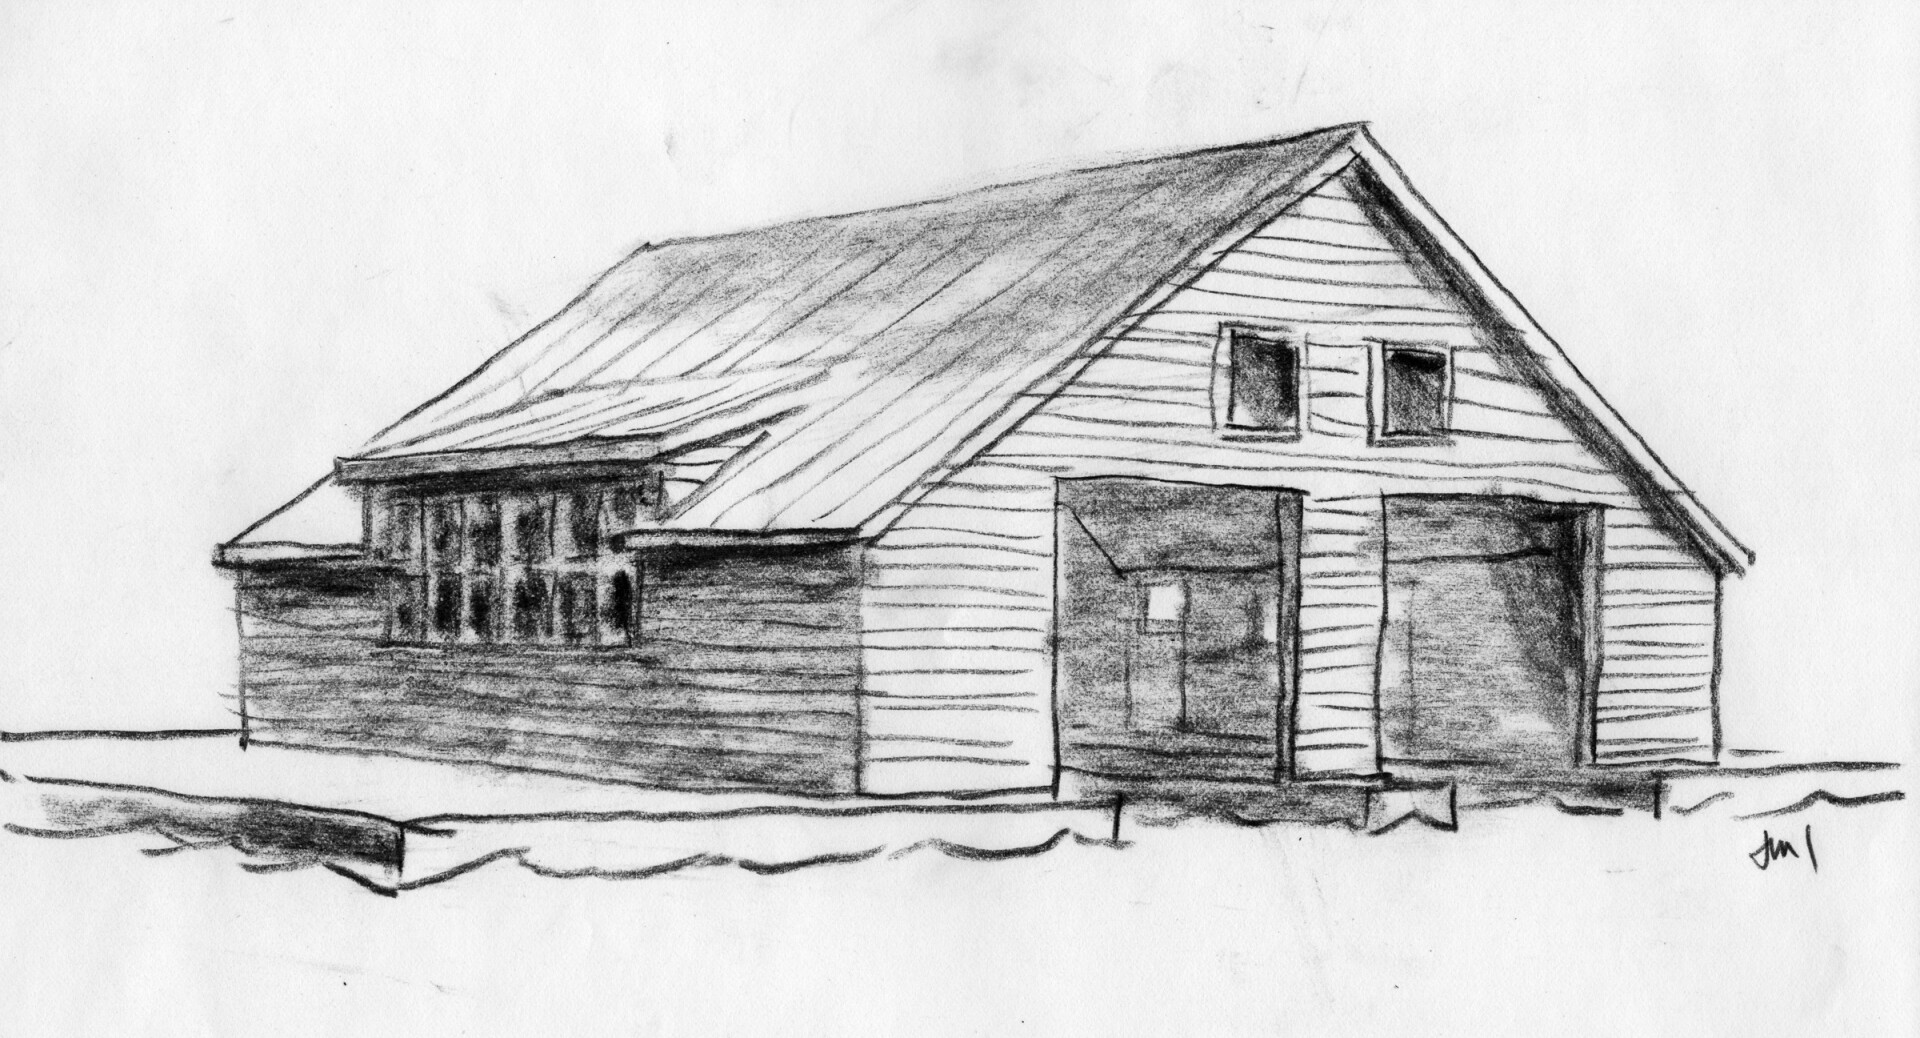 Cottage and boathouse on Lake of Bays West